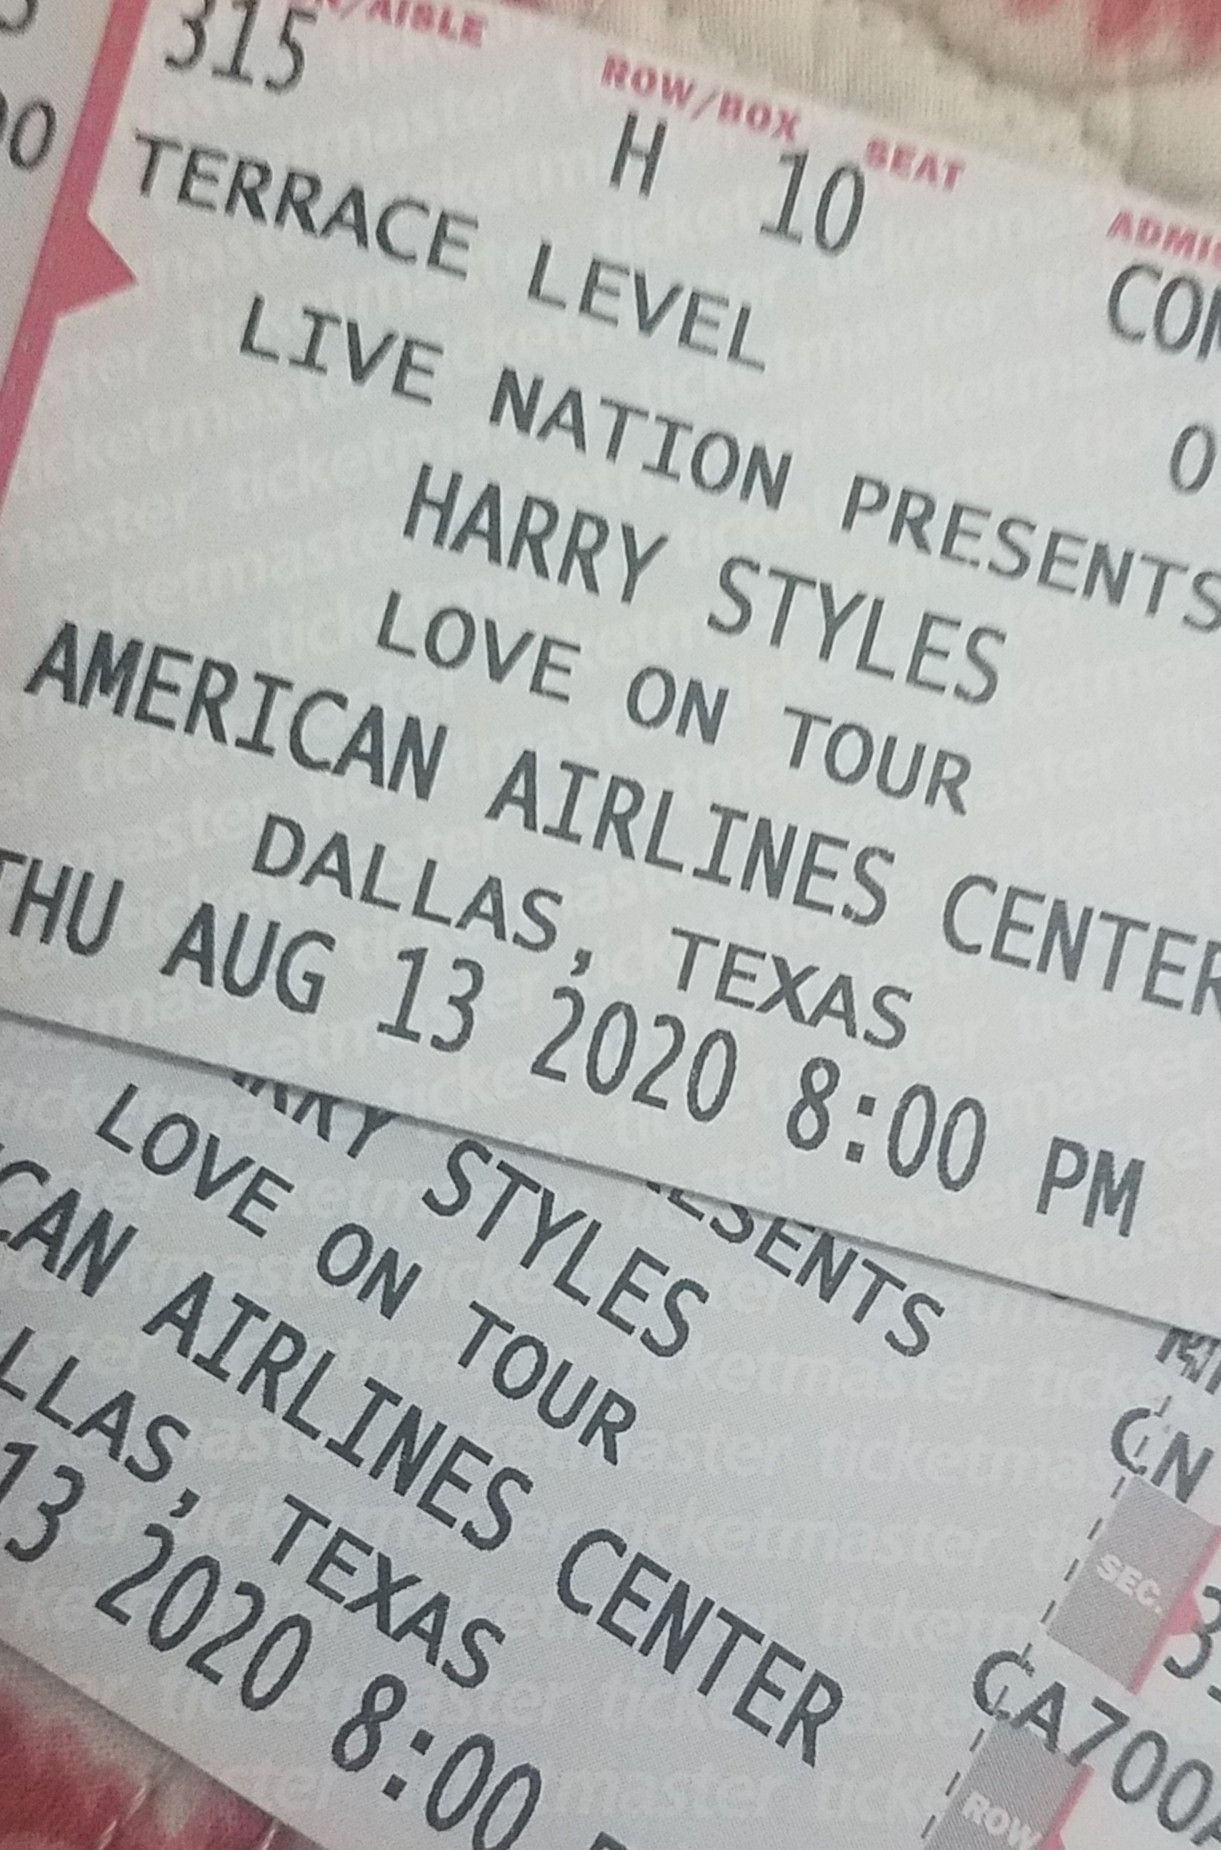 Harry Styles Tickets